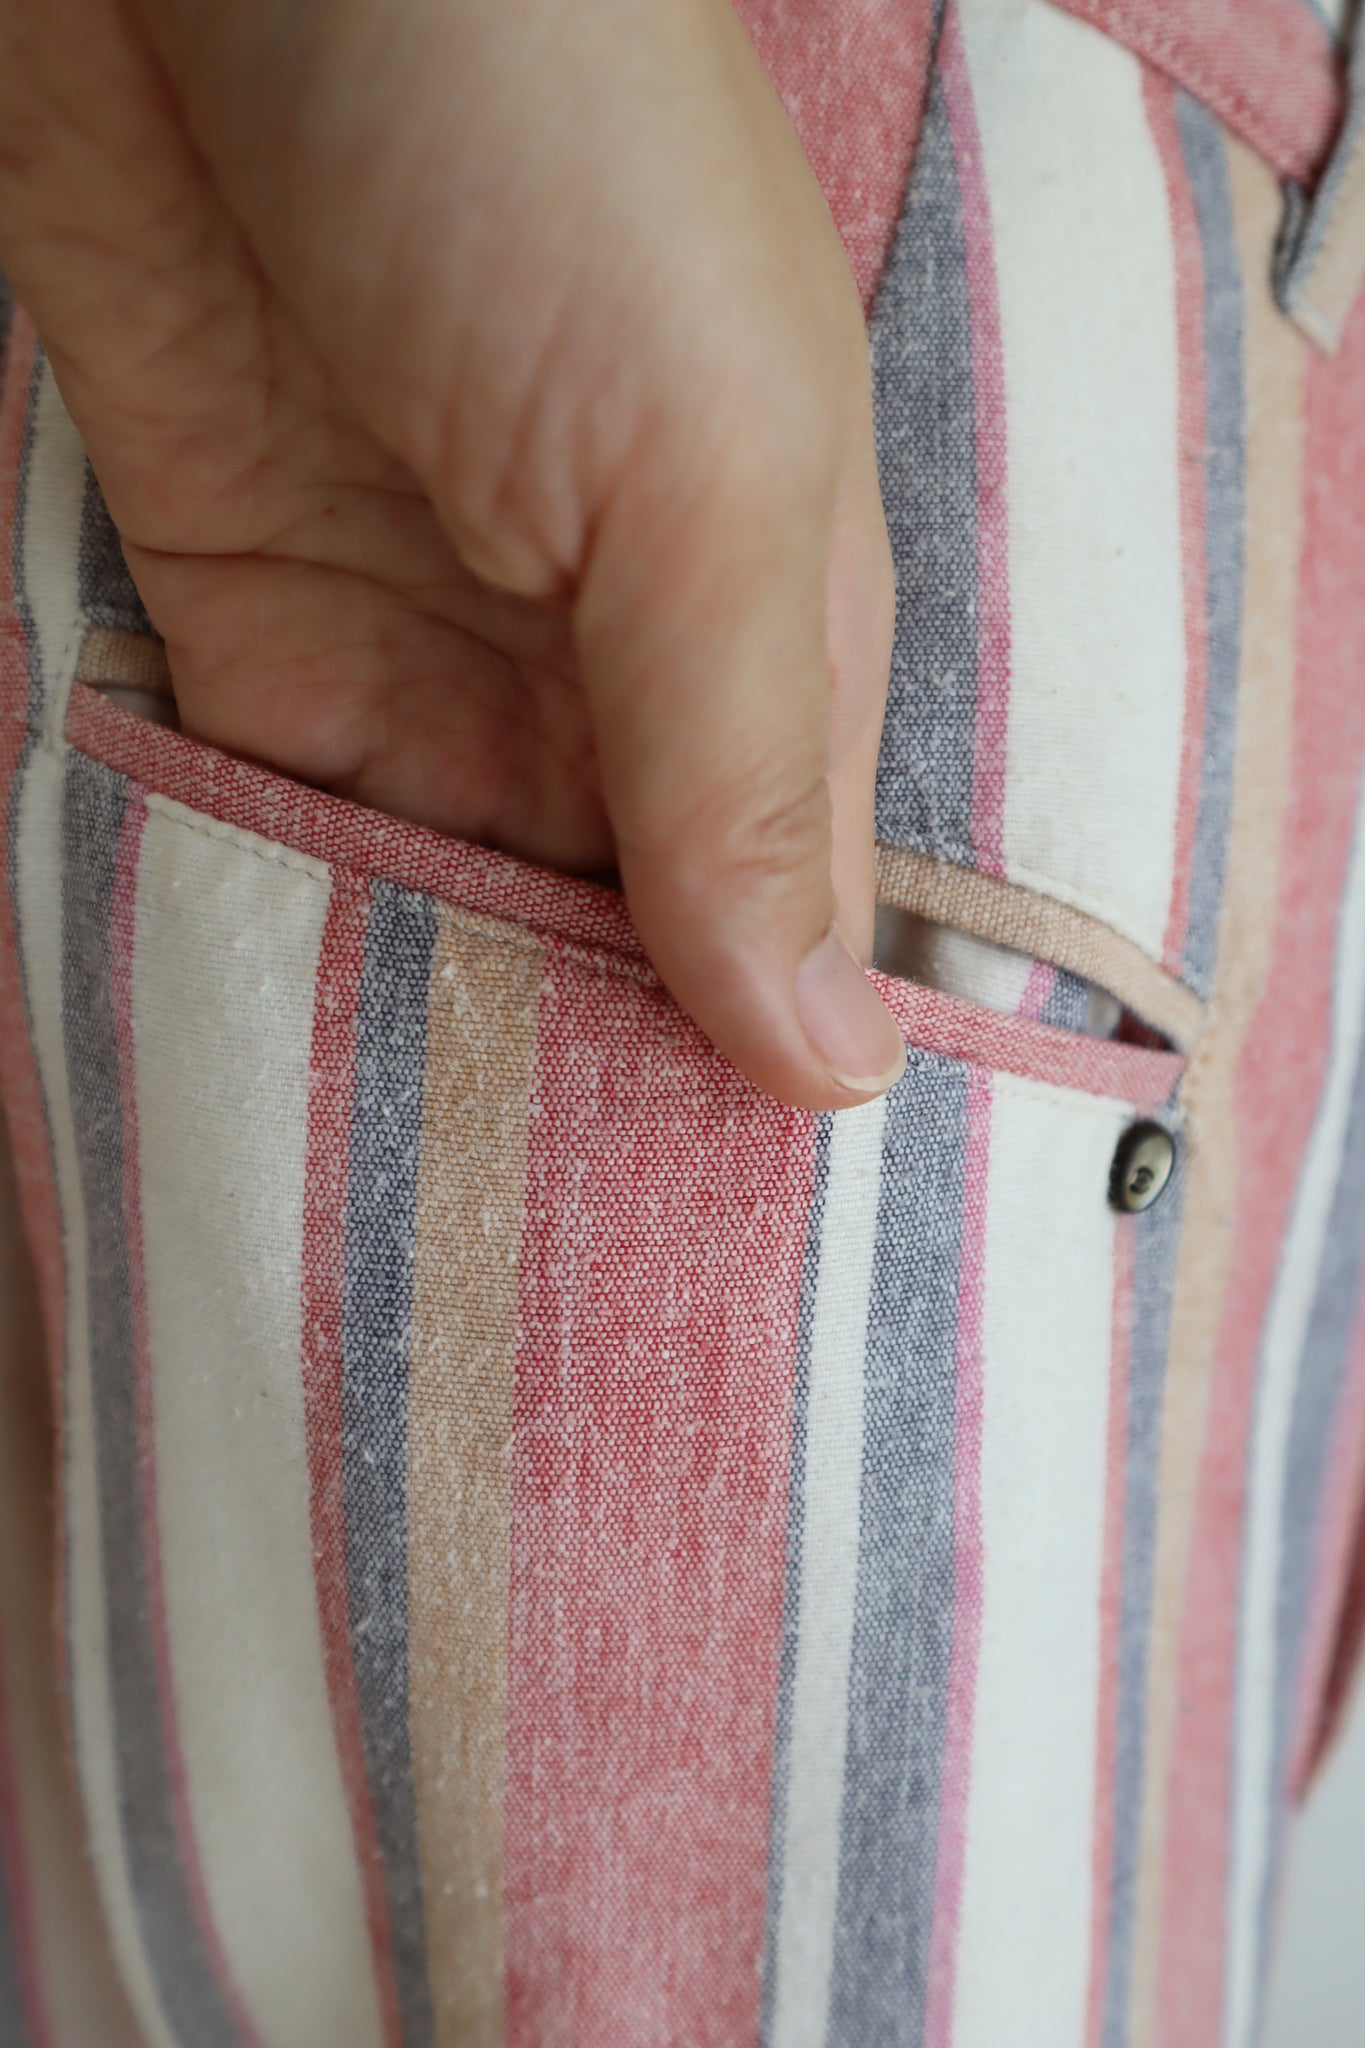 Vintage Stripe Cotton Pants